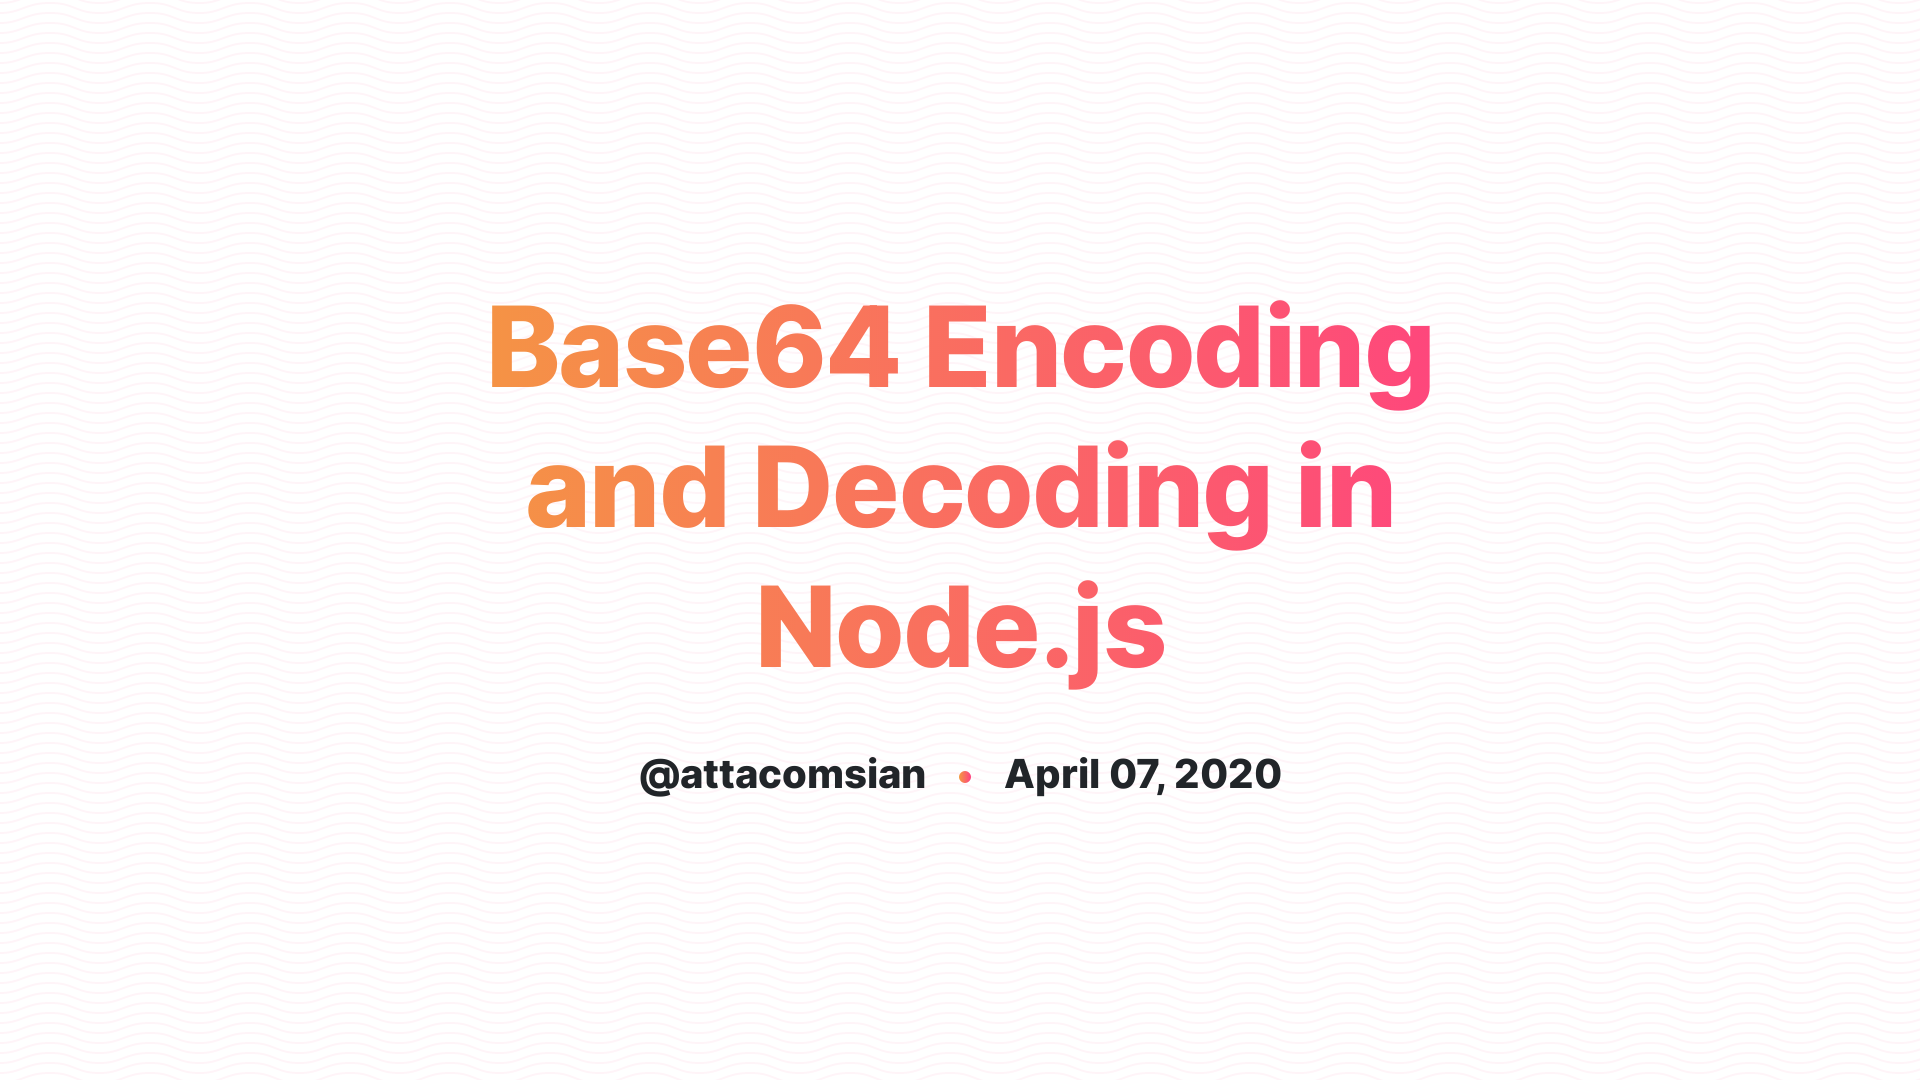 base64 encoding table